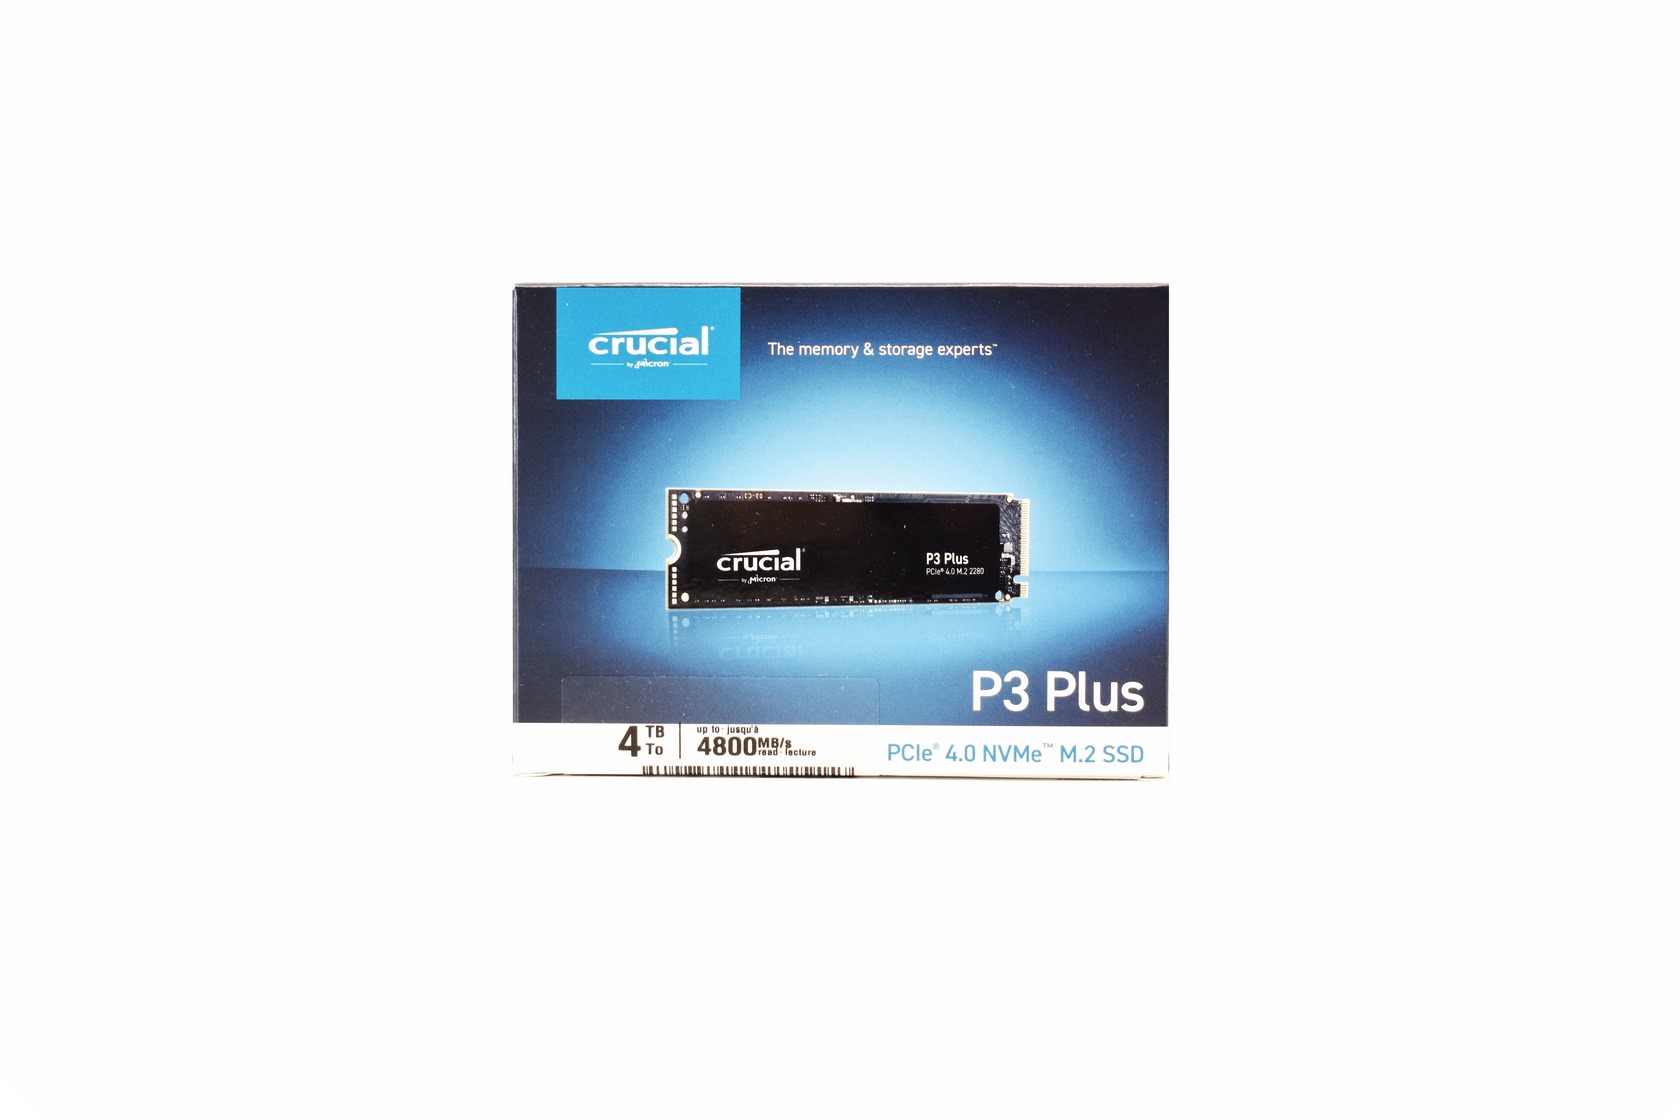 Crucial P3 Plus 1TB NVMe M.2 SSD Unboxing & CrystalDiskMark Speed